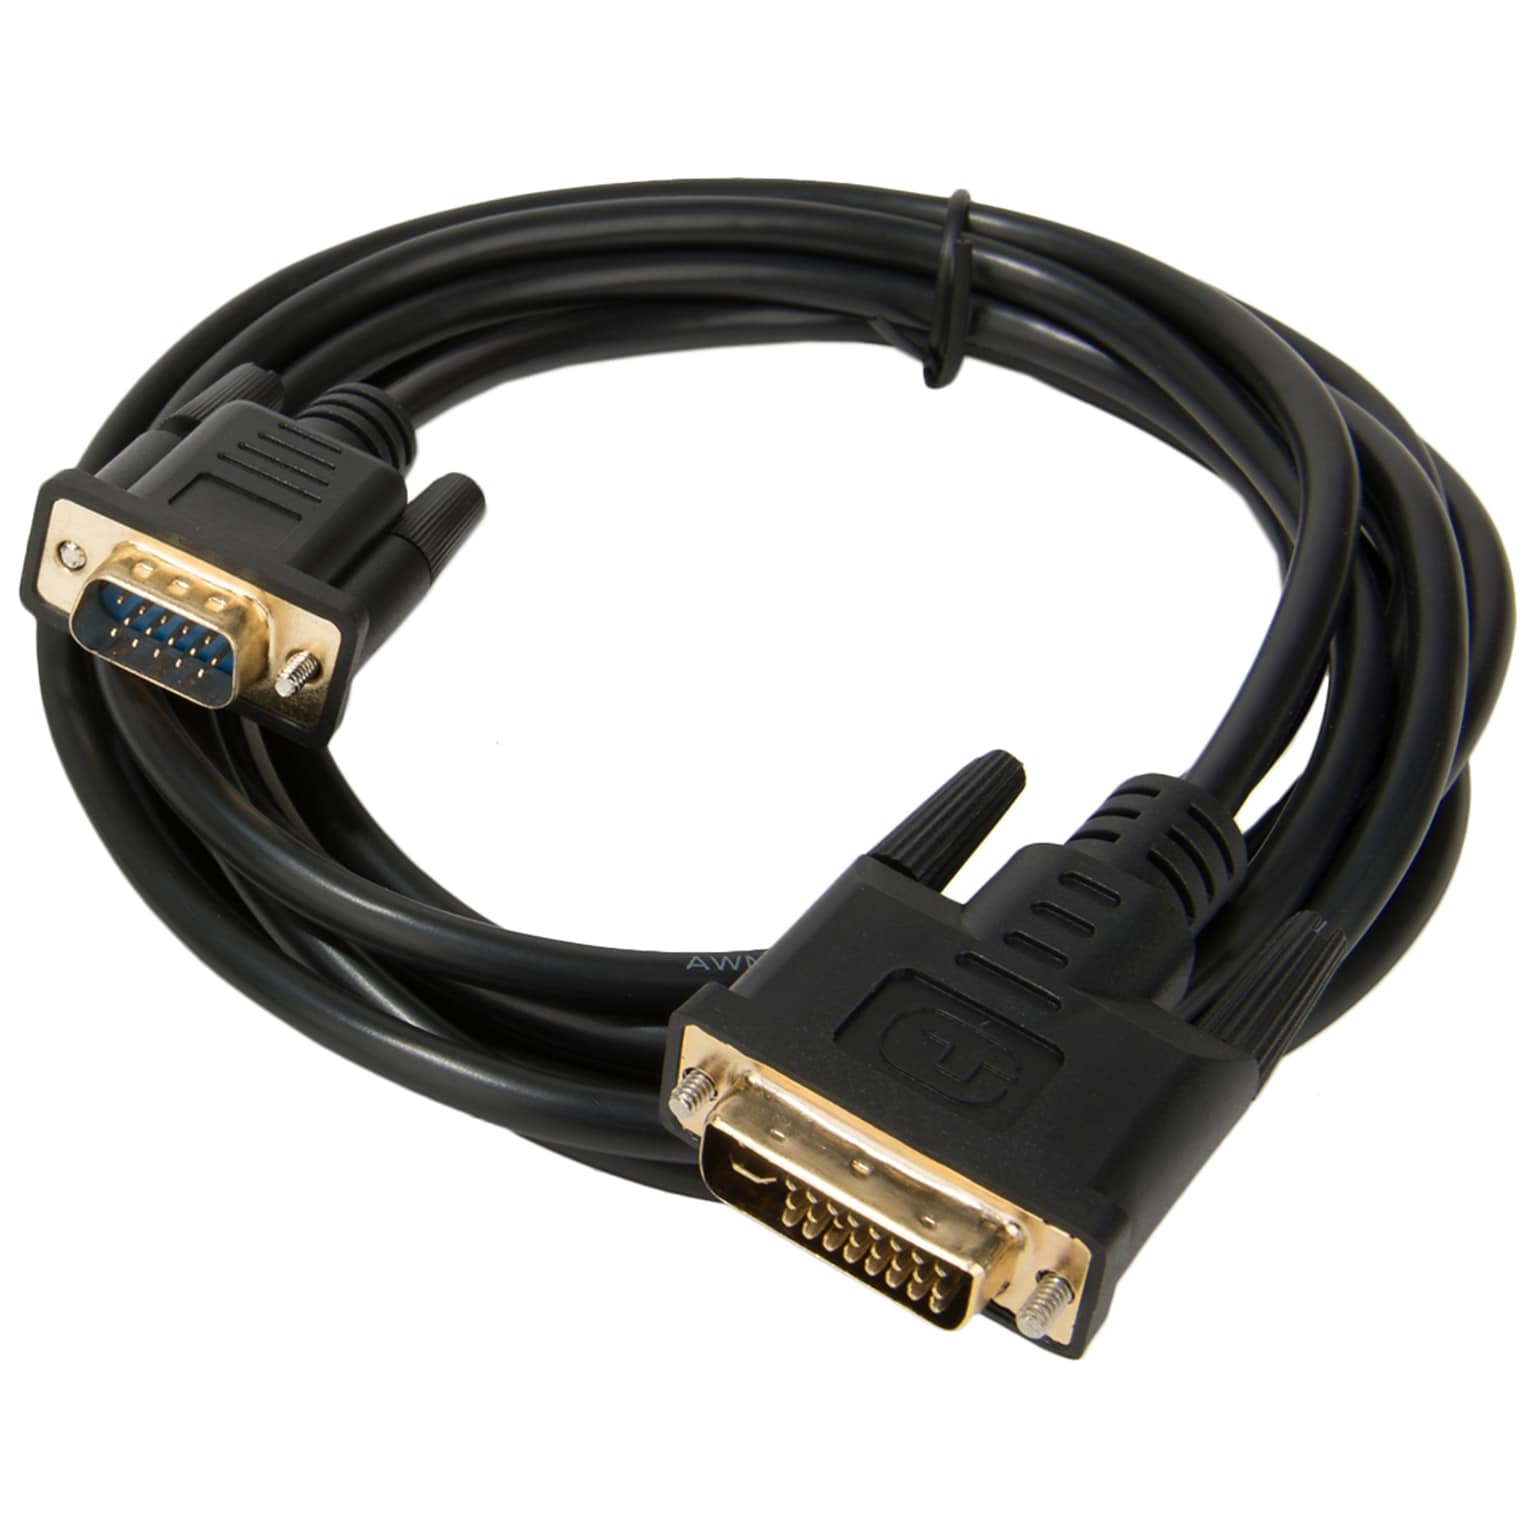 Sumaclife 10 Feet DVI 24-5 PIN DVI-Male to 15-pin VGA-Male Cable